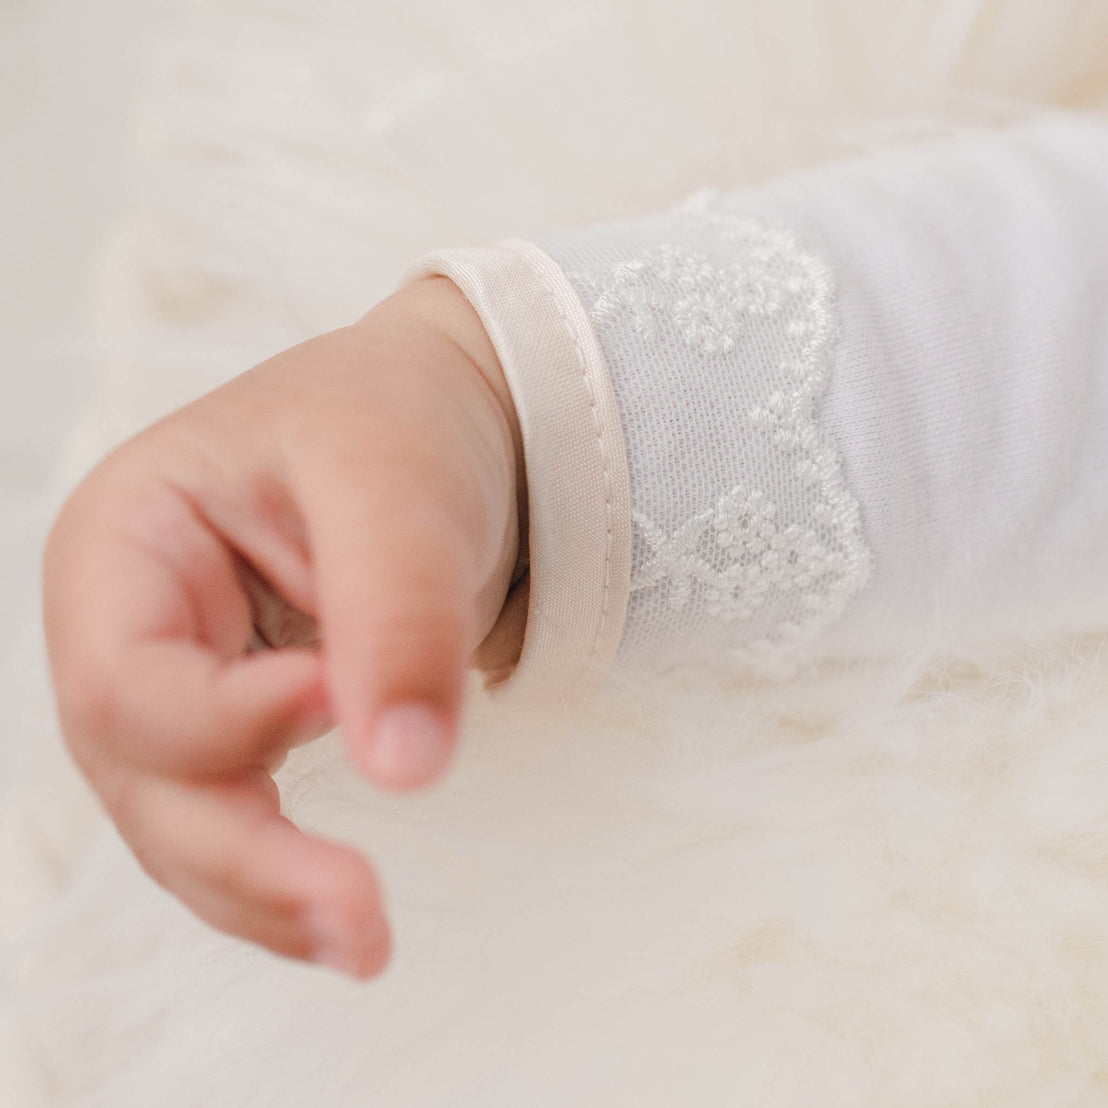 Close up photo showing the Tessa Quilt Newborn Gown sleeve hem.